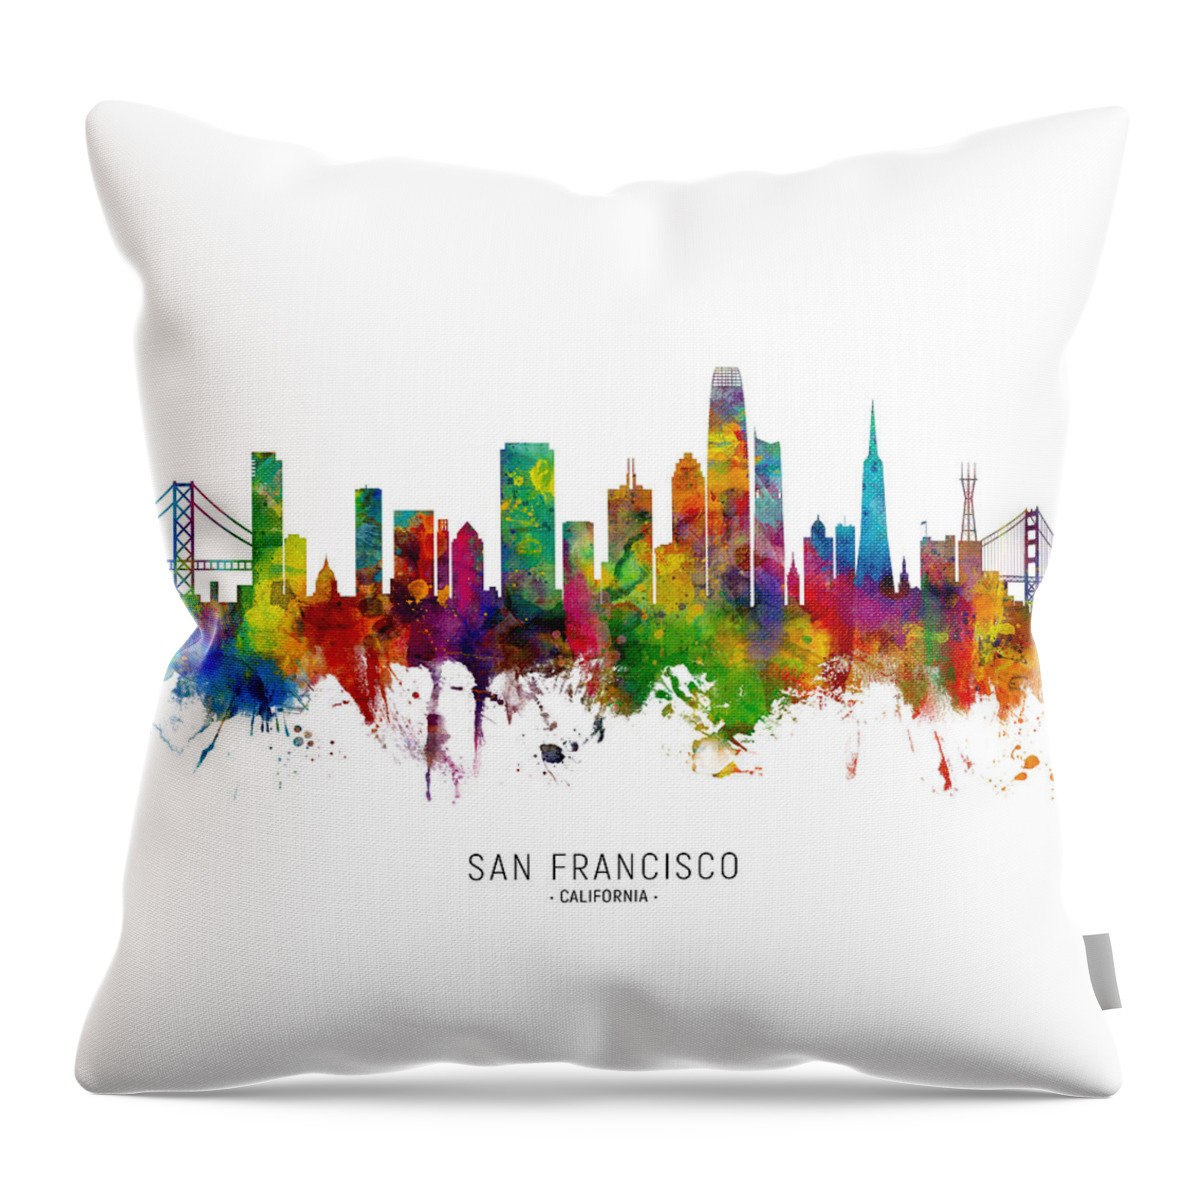 San Francisco Throw Pillow featuring the digital art San Francisco California Skyline #3 by Michael Tompsett